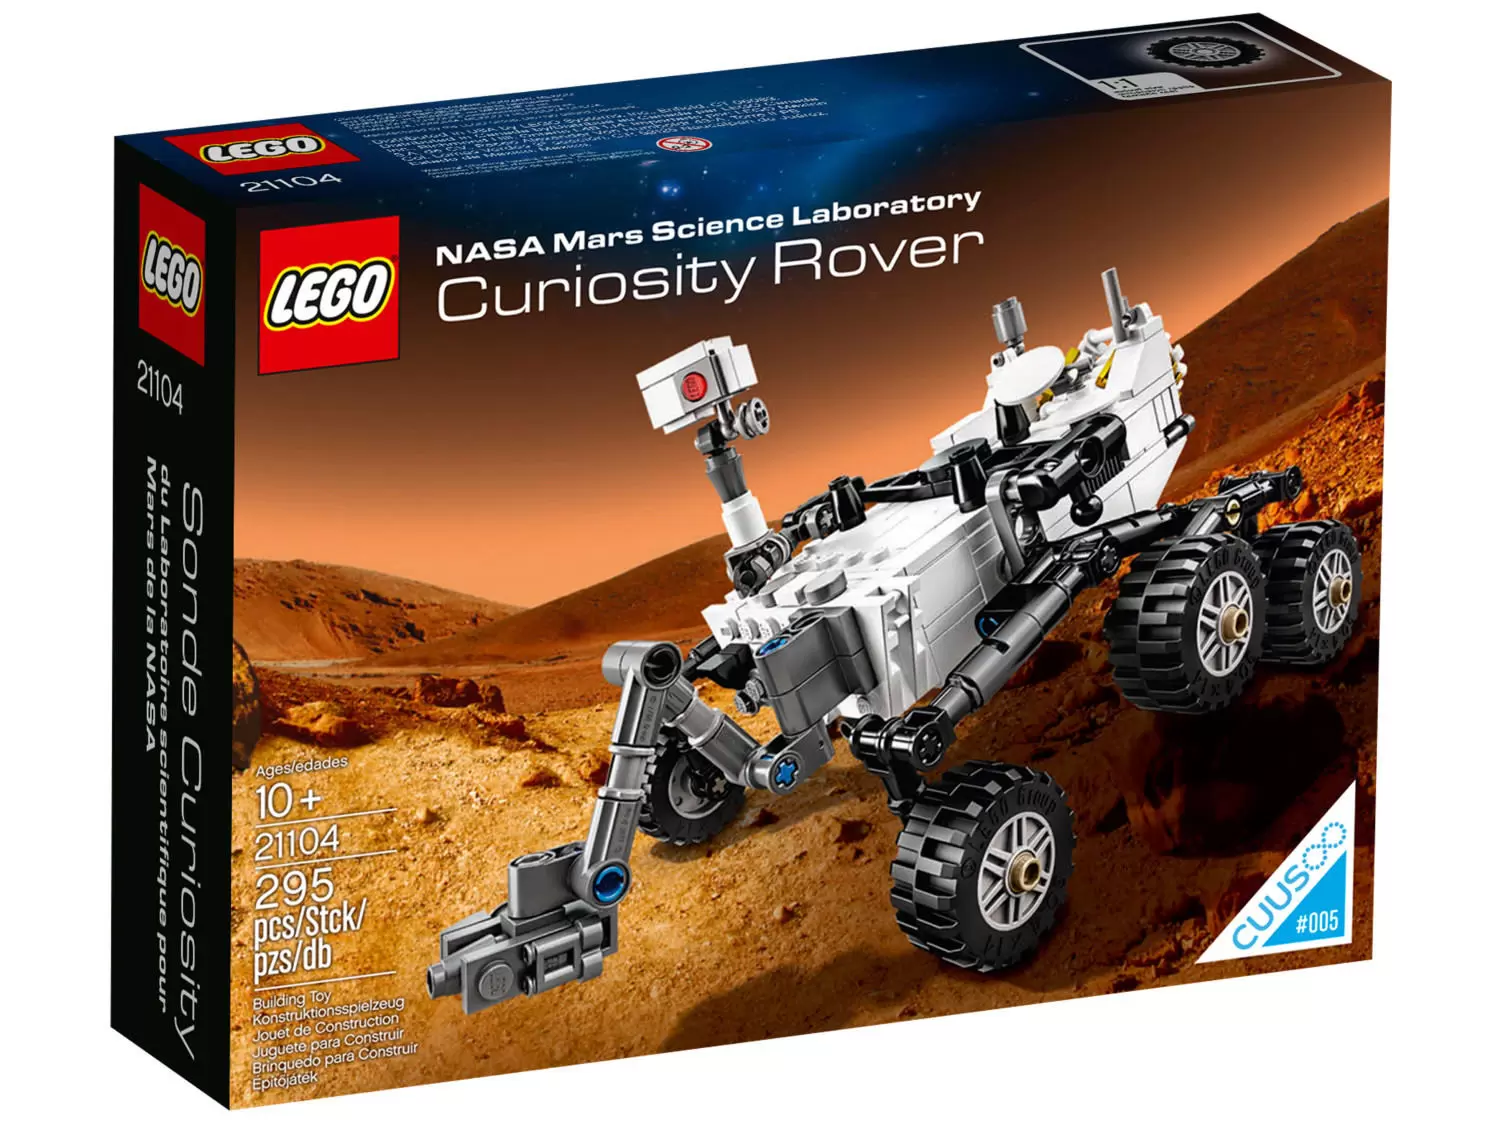 LEGO Ideas - NASA Mars Science Laboratory Curiosity Rover